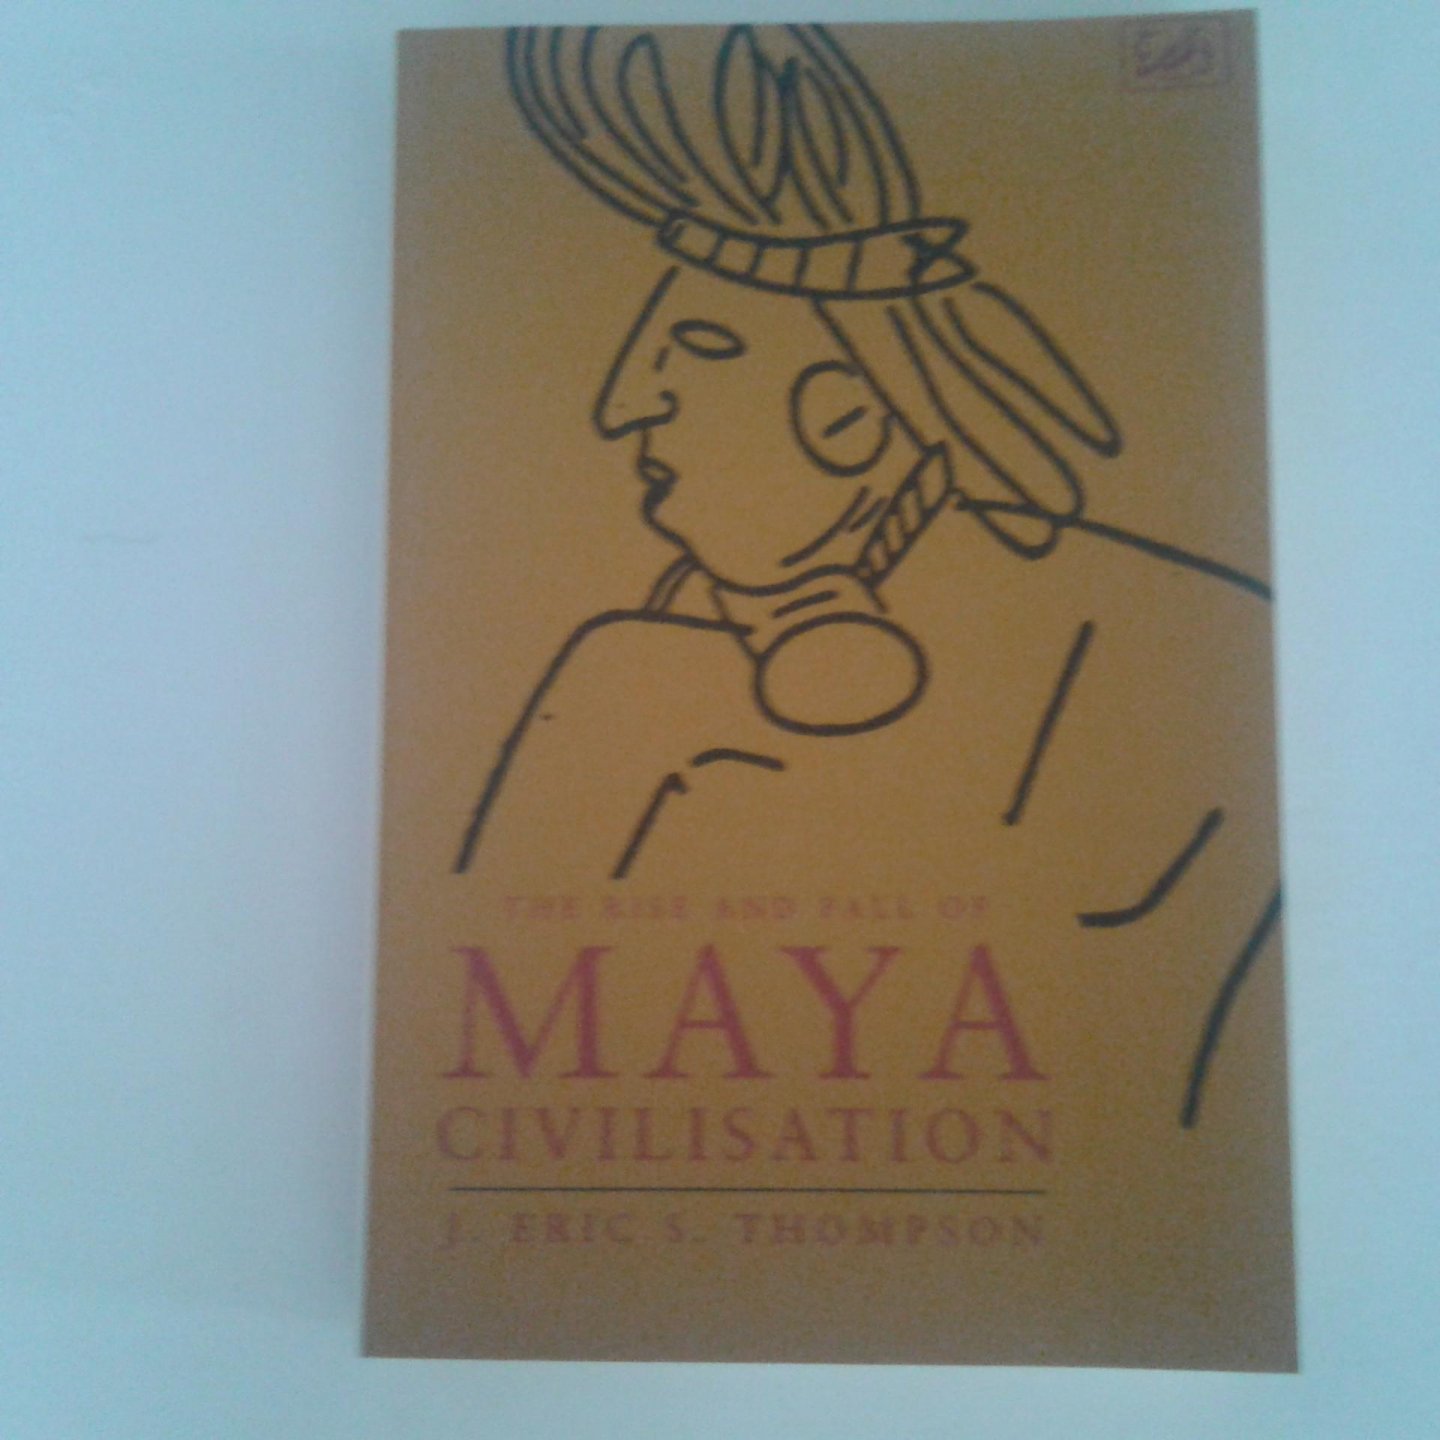 Thompson, J. Eric S. - The Rise and Fall of Maya Civilisation